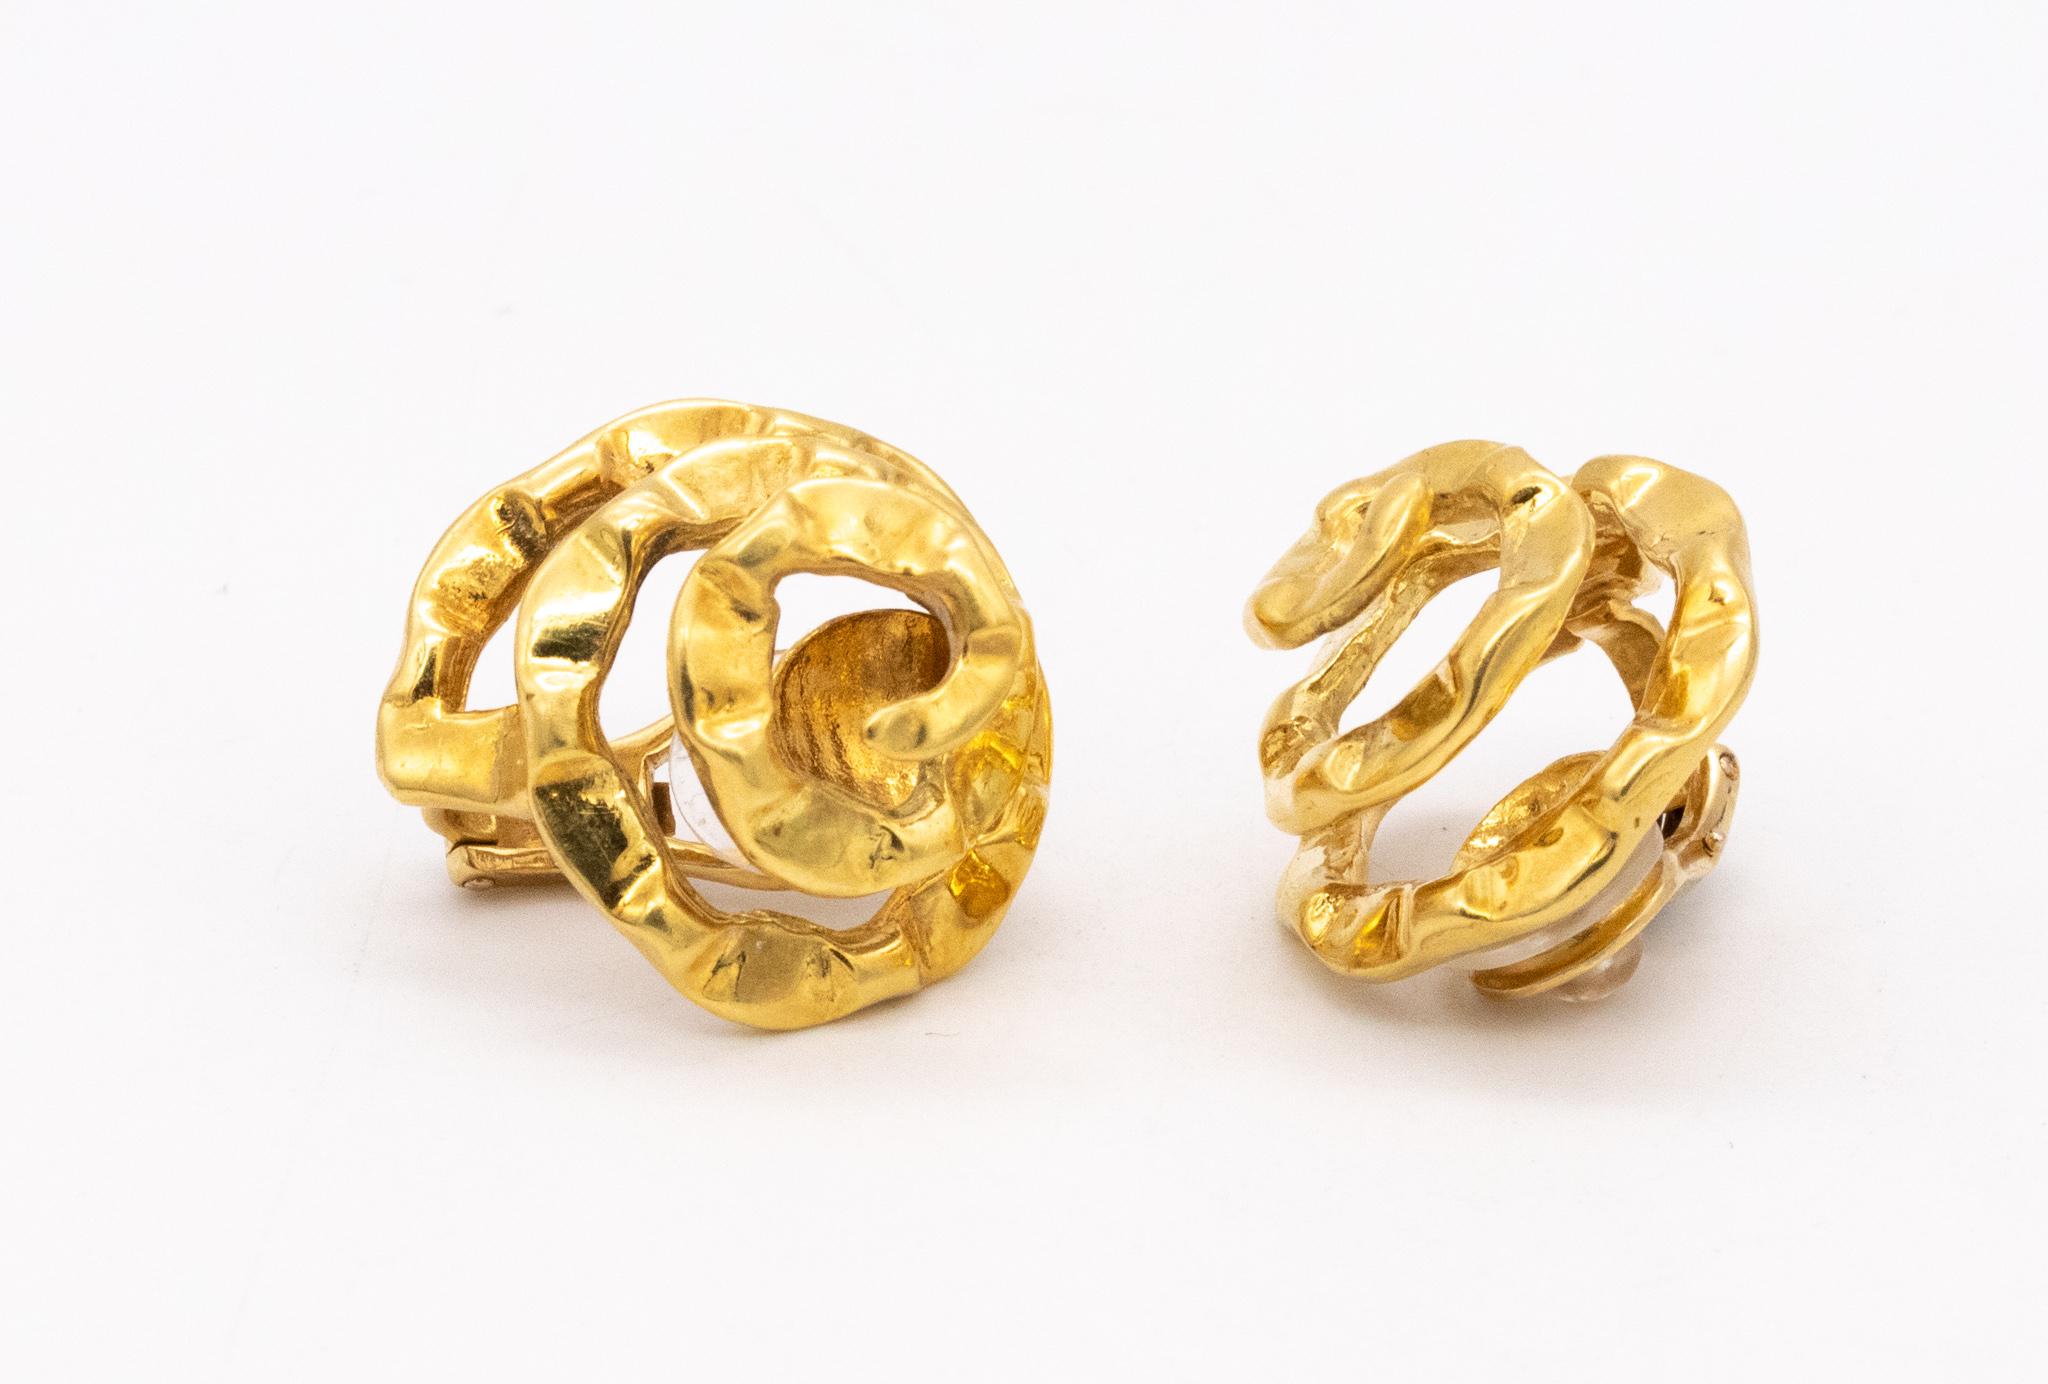 Modernist Cartier 1972 by Aldo Cipullo Spirals Swirls Clips Earrings in Textured 18Kt Gold